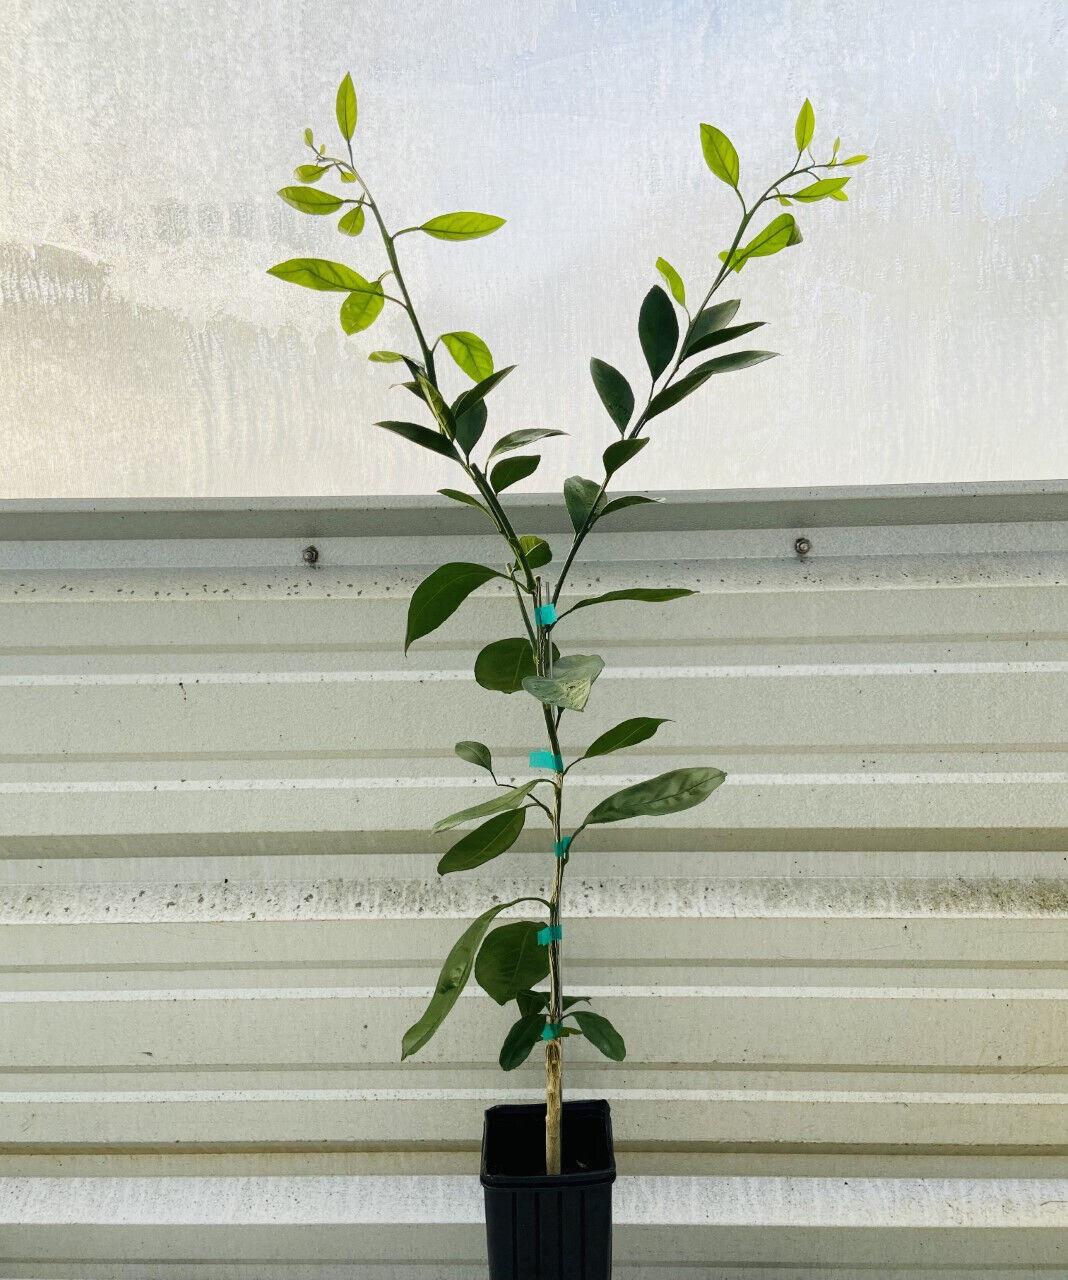 Shiranui/Sumo Mandarin, Dekopon Tangerine Tree - 26-30" Tall - Live Citrus Plant - The Nursery Center